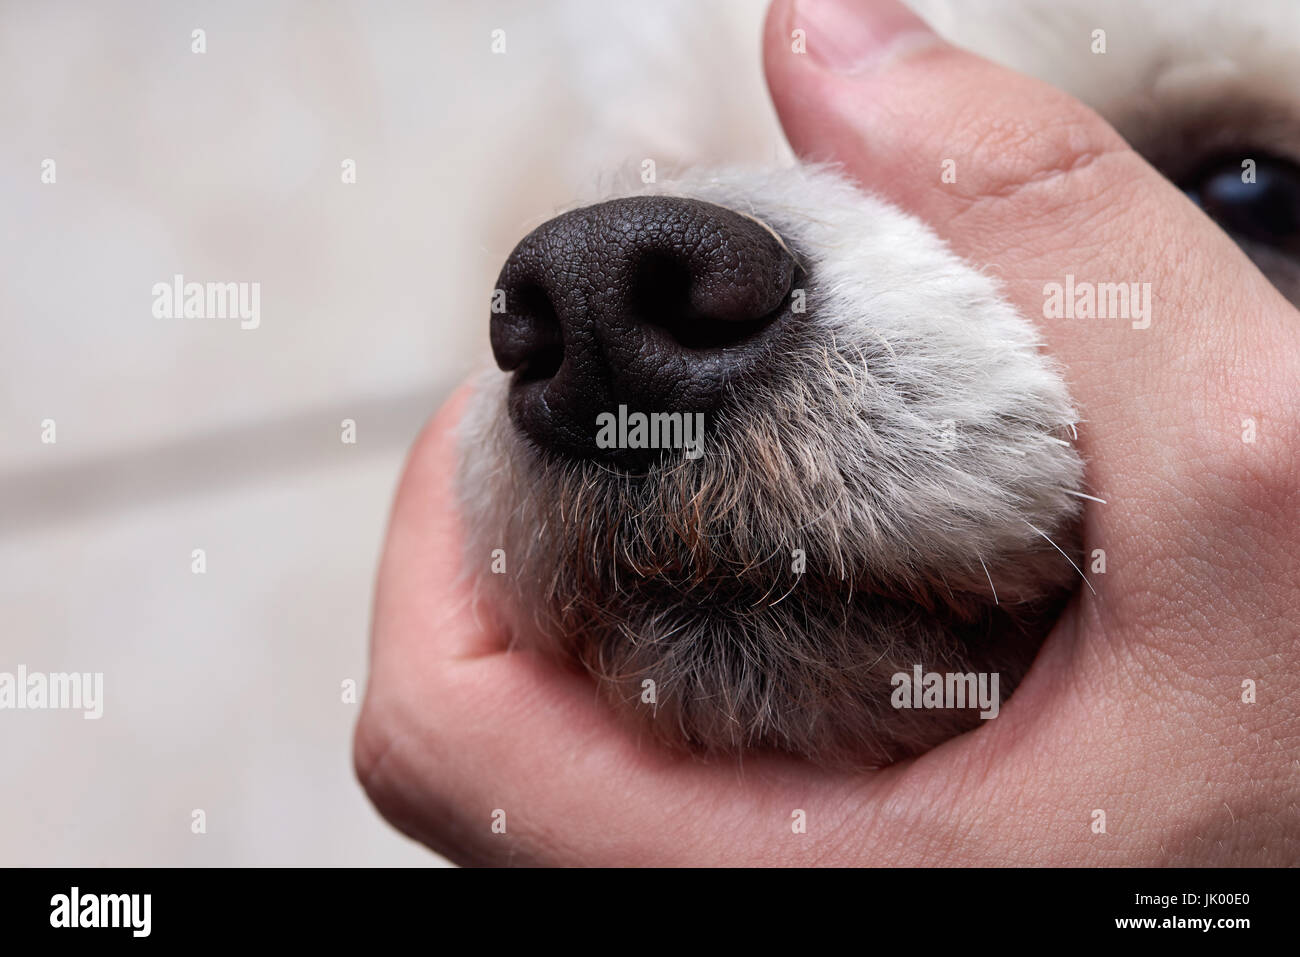 Violence over dog theme. Man holding dog mouth shut close-up Stock Photo